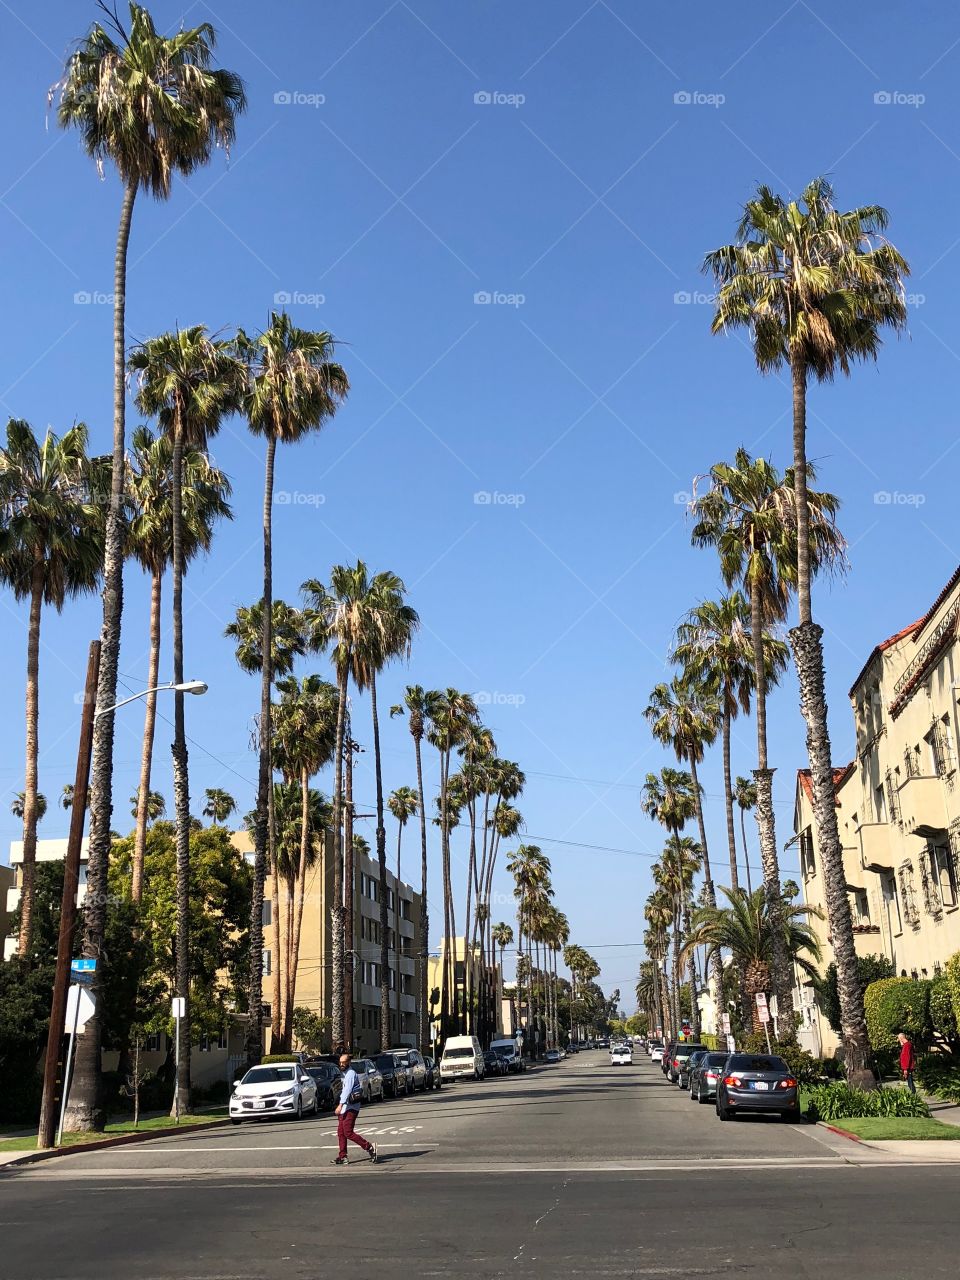 Santa Monica , I love when trees line roads like this, so beautiful 